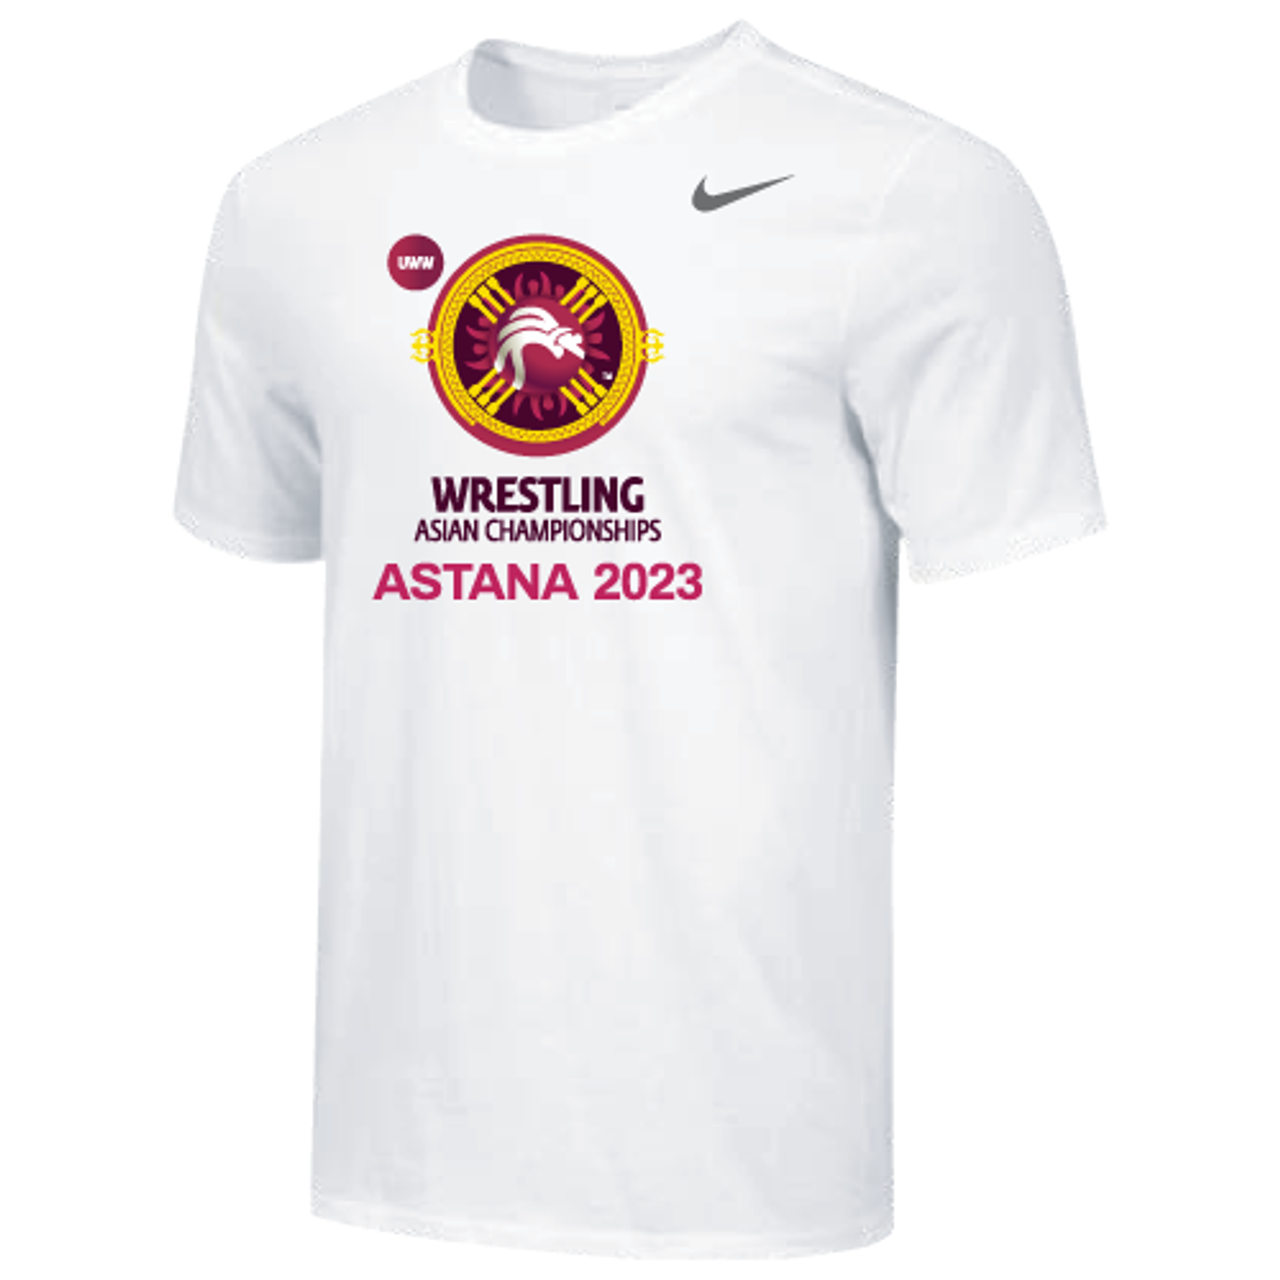 Men's Asian Championships Astana 2023 Tee White